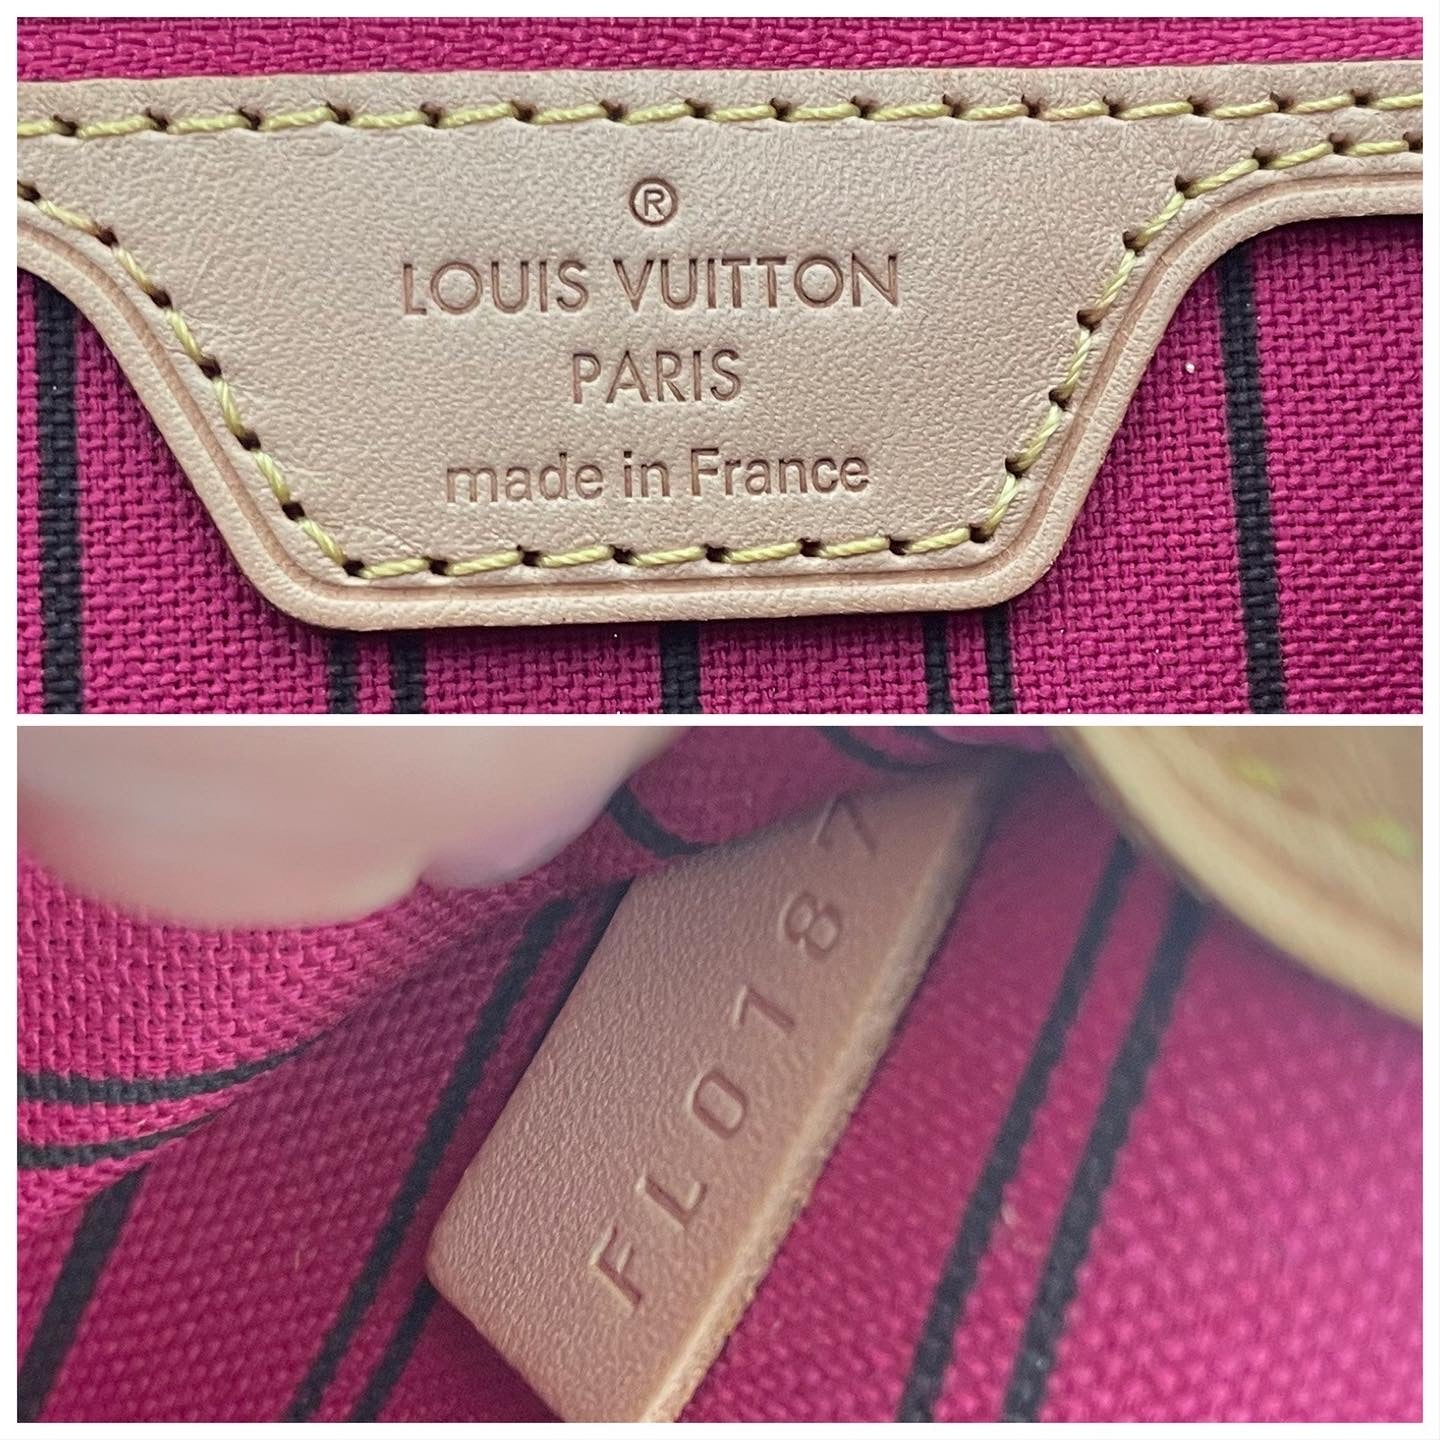 Louis Vuitton Neverfull GM in Monogram Pivoine with Felt Liner - SOLD